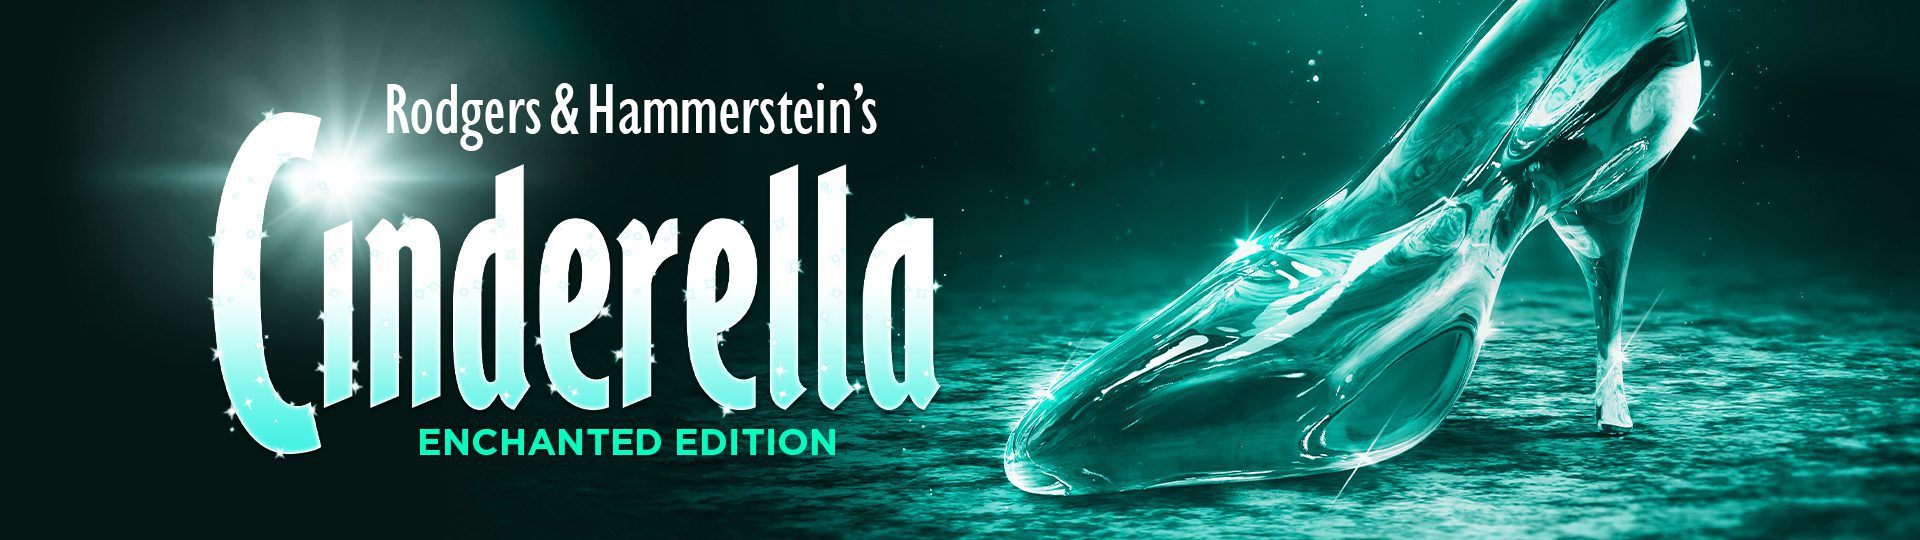 MY Theatre: Rodgers & Hammerstein’s Cinderella (Enchanted Edition)